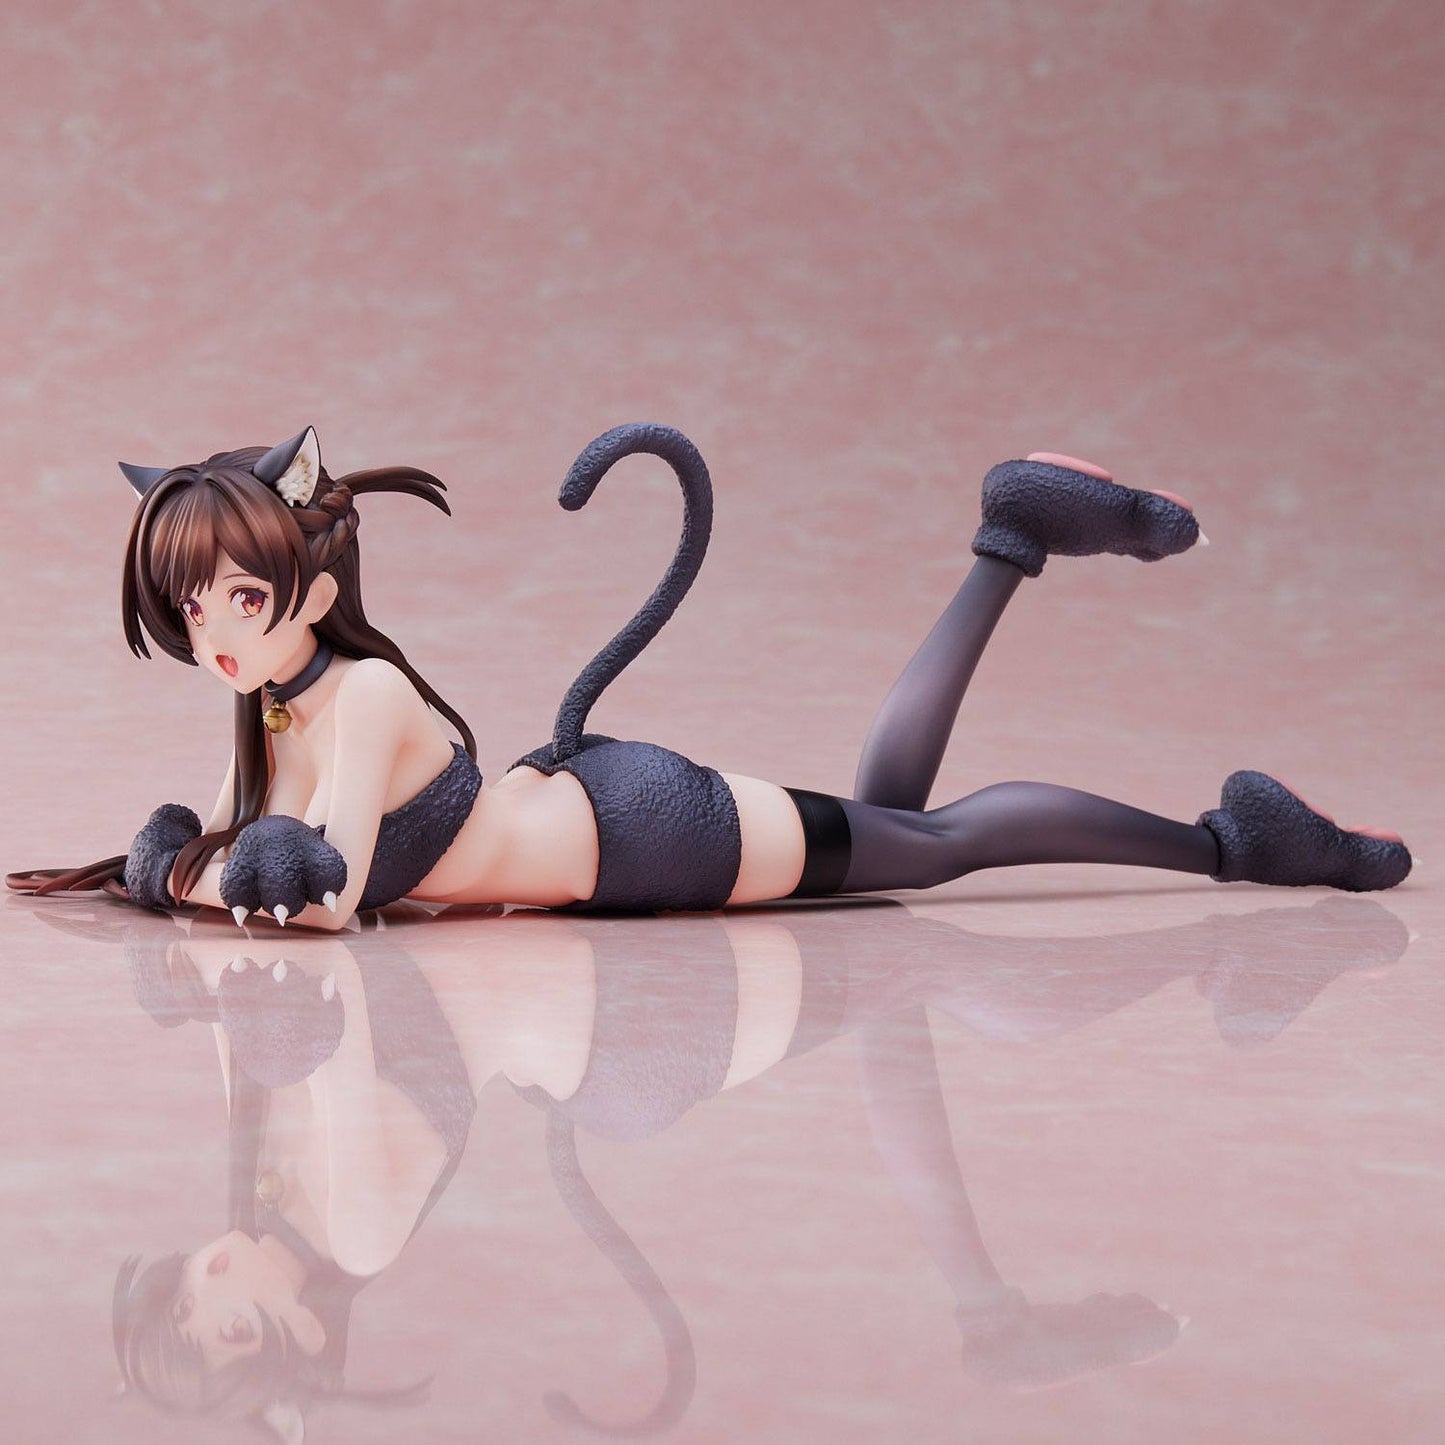 Chizuru Mizuhara - Cat Cosplay Ver. / Rent a Girlfriend